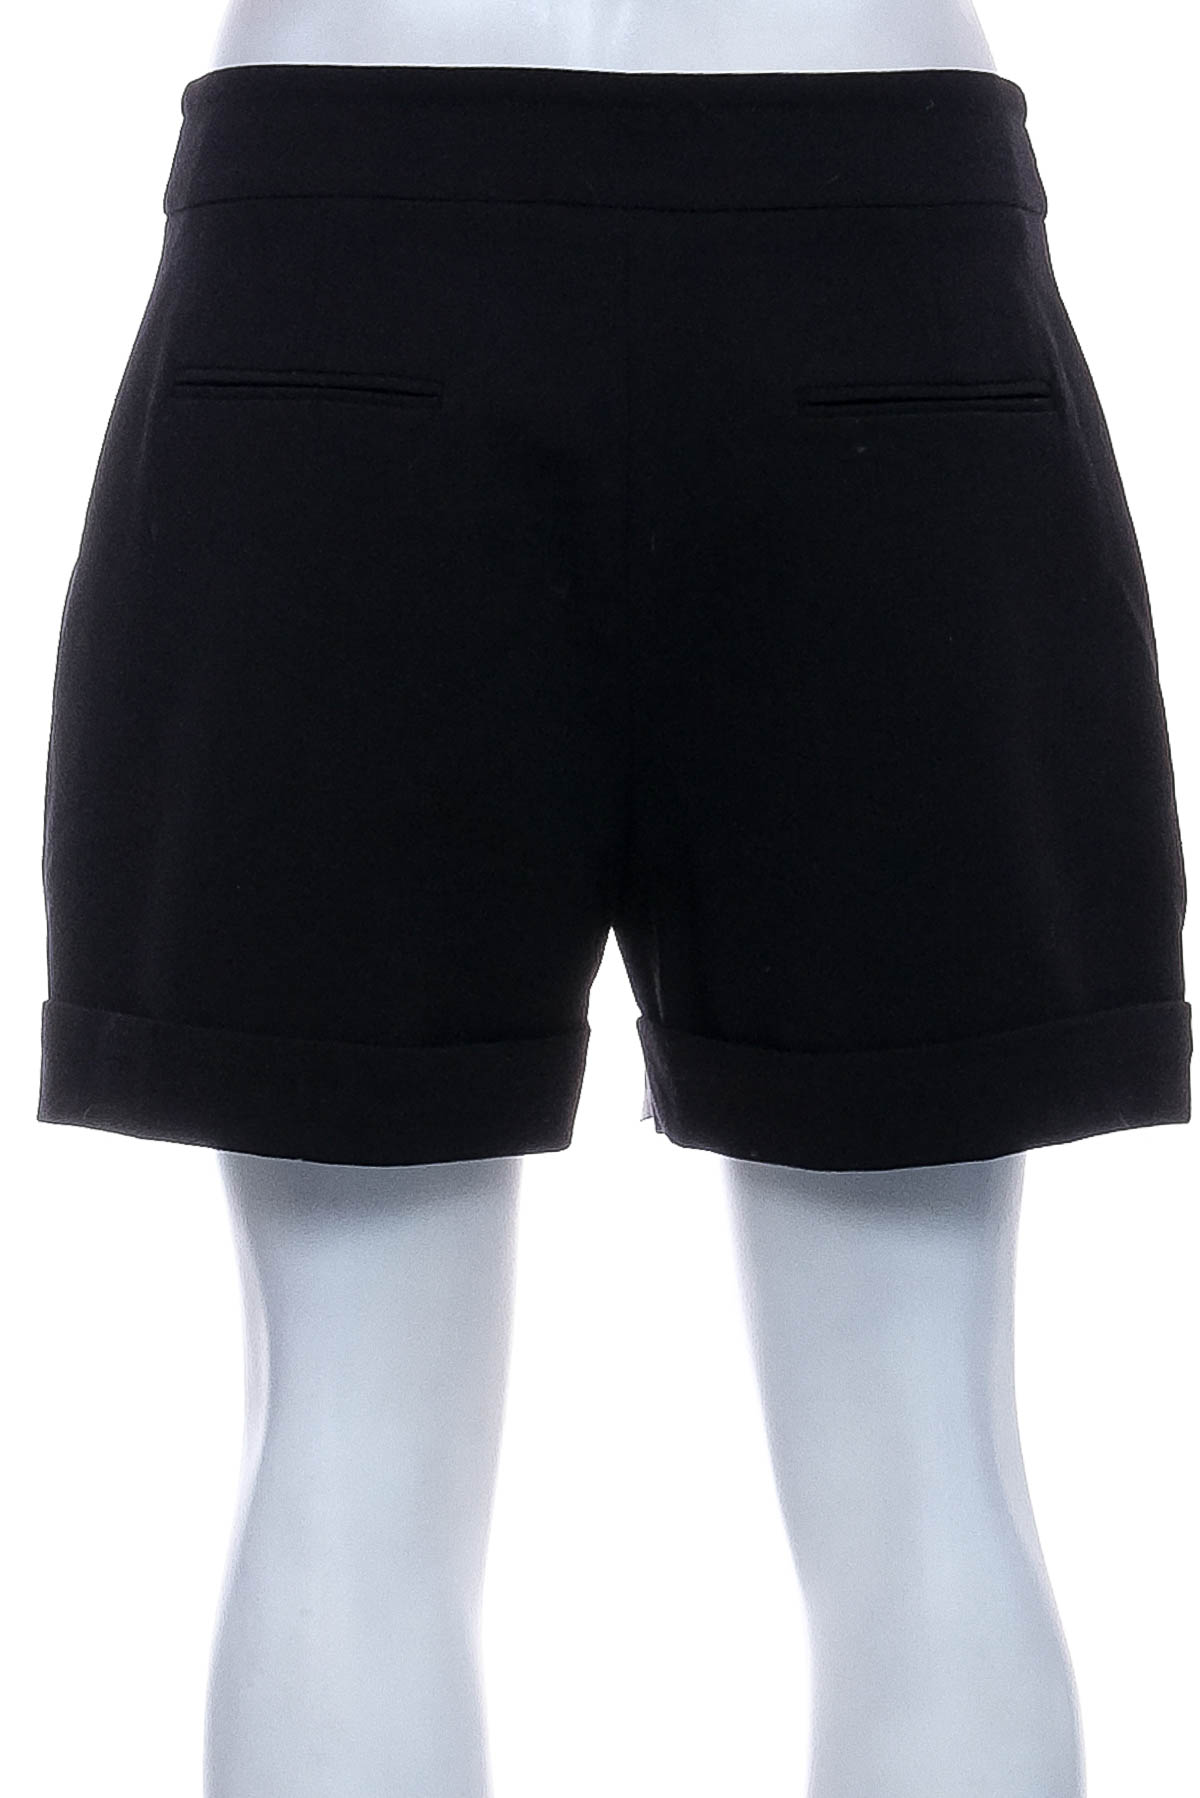 Female shorts - Sandro - 1